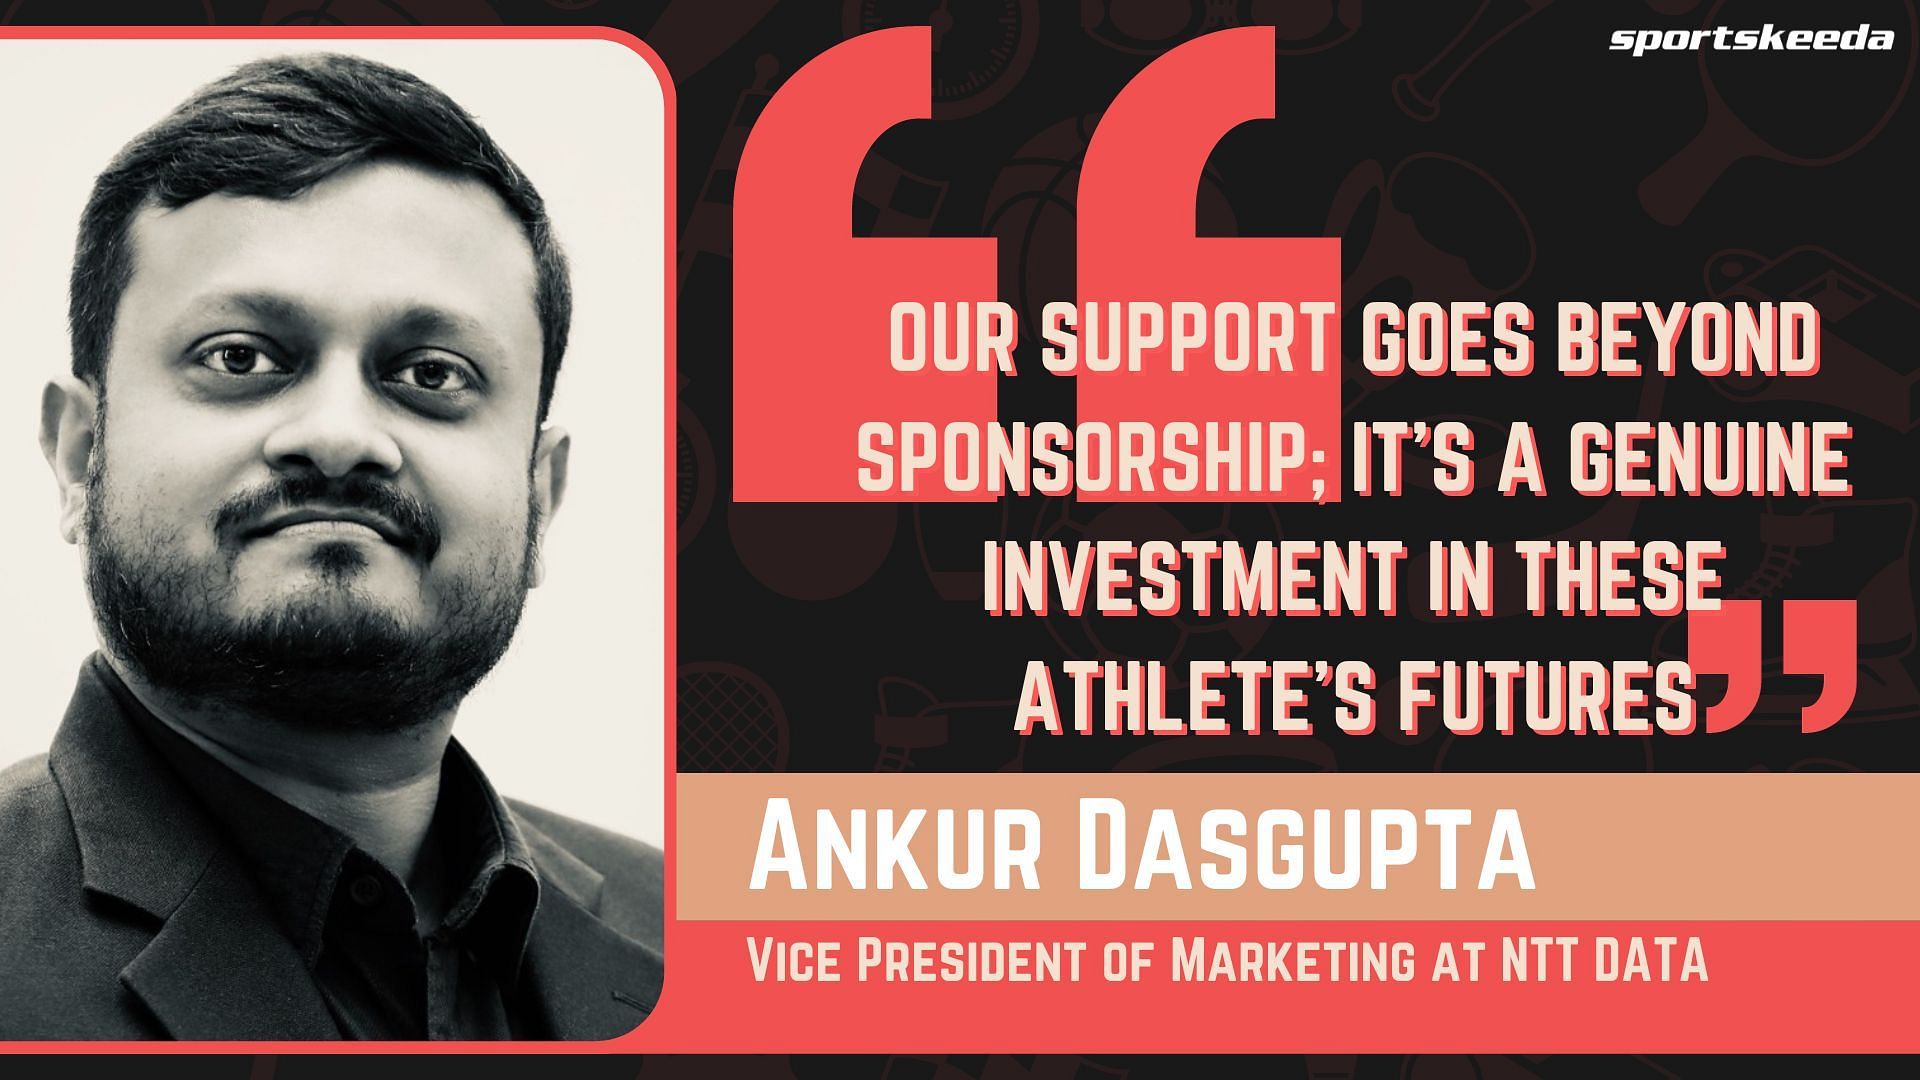  Ankur Dasgupta, VP of Marketing at NTT DATA (Image via Sportskeeda)